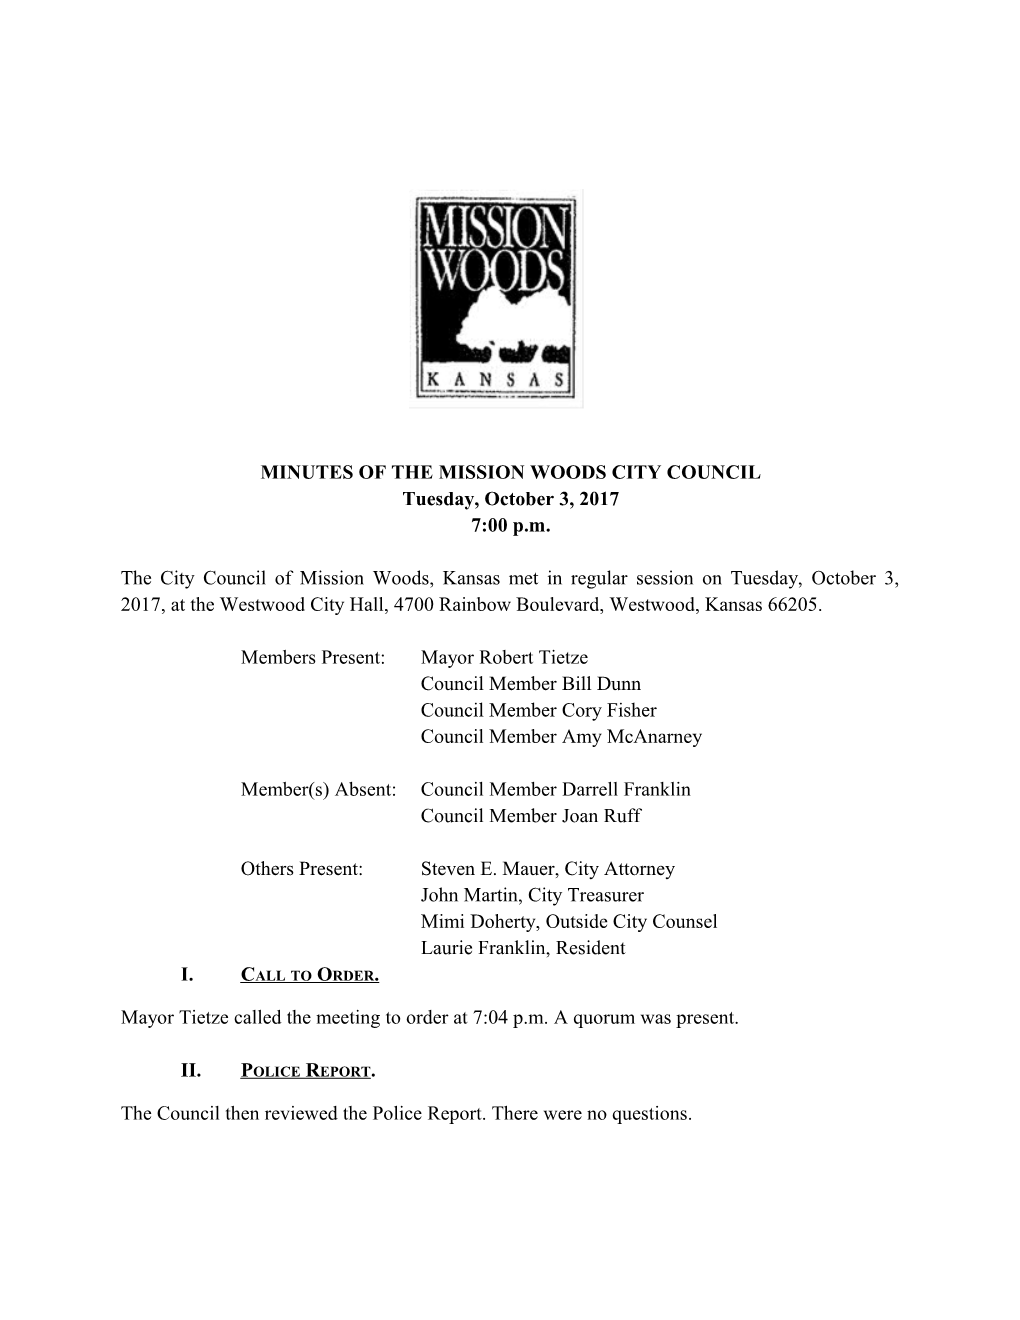 10-3-17 City Council Minutes (00031688)